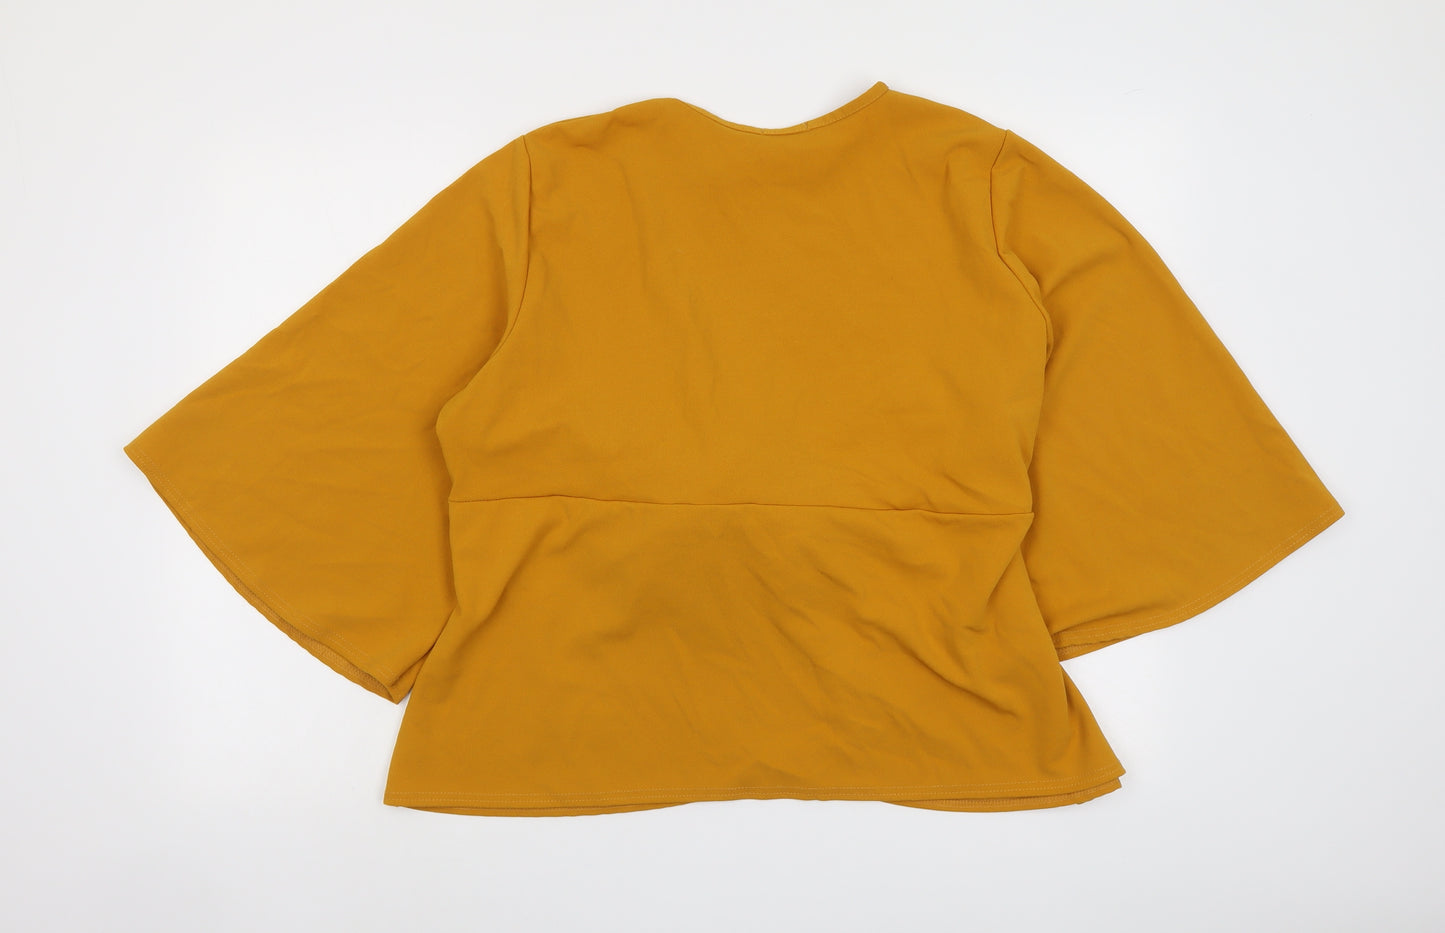 Boohoo Womens Yellow Polyester Basic Blouse Size 24 Round Neck